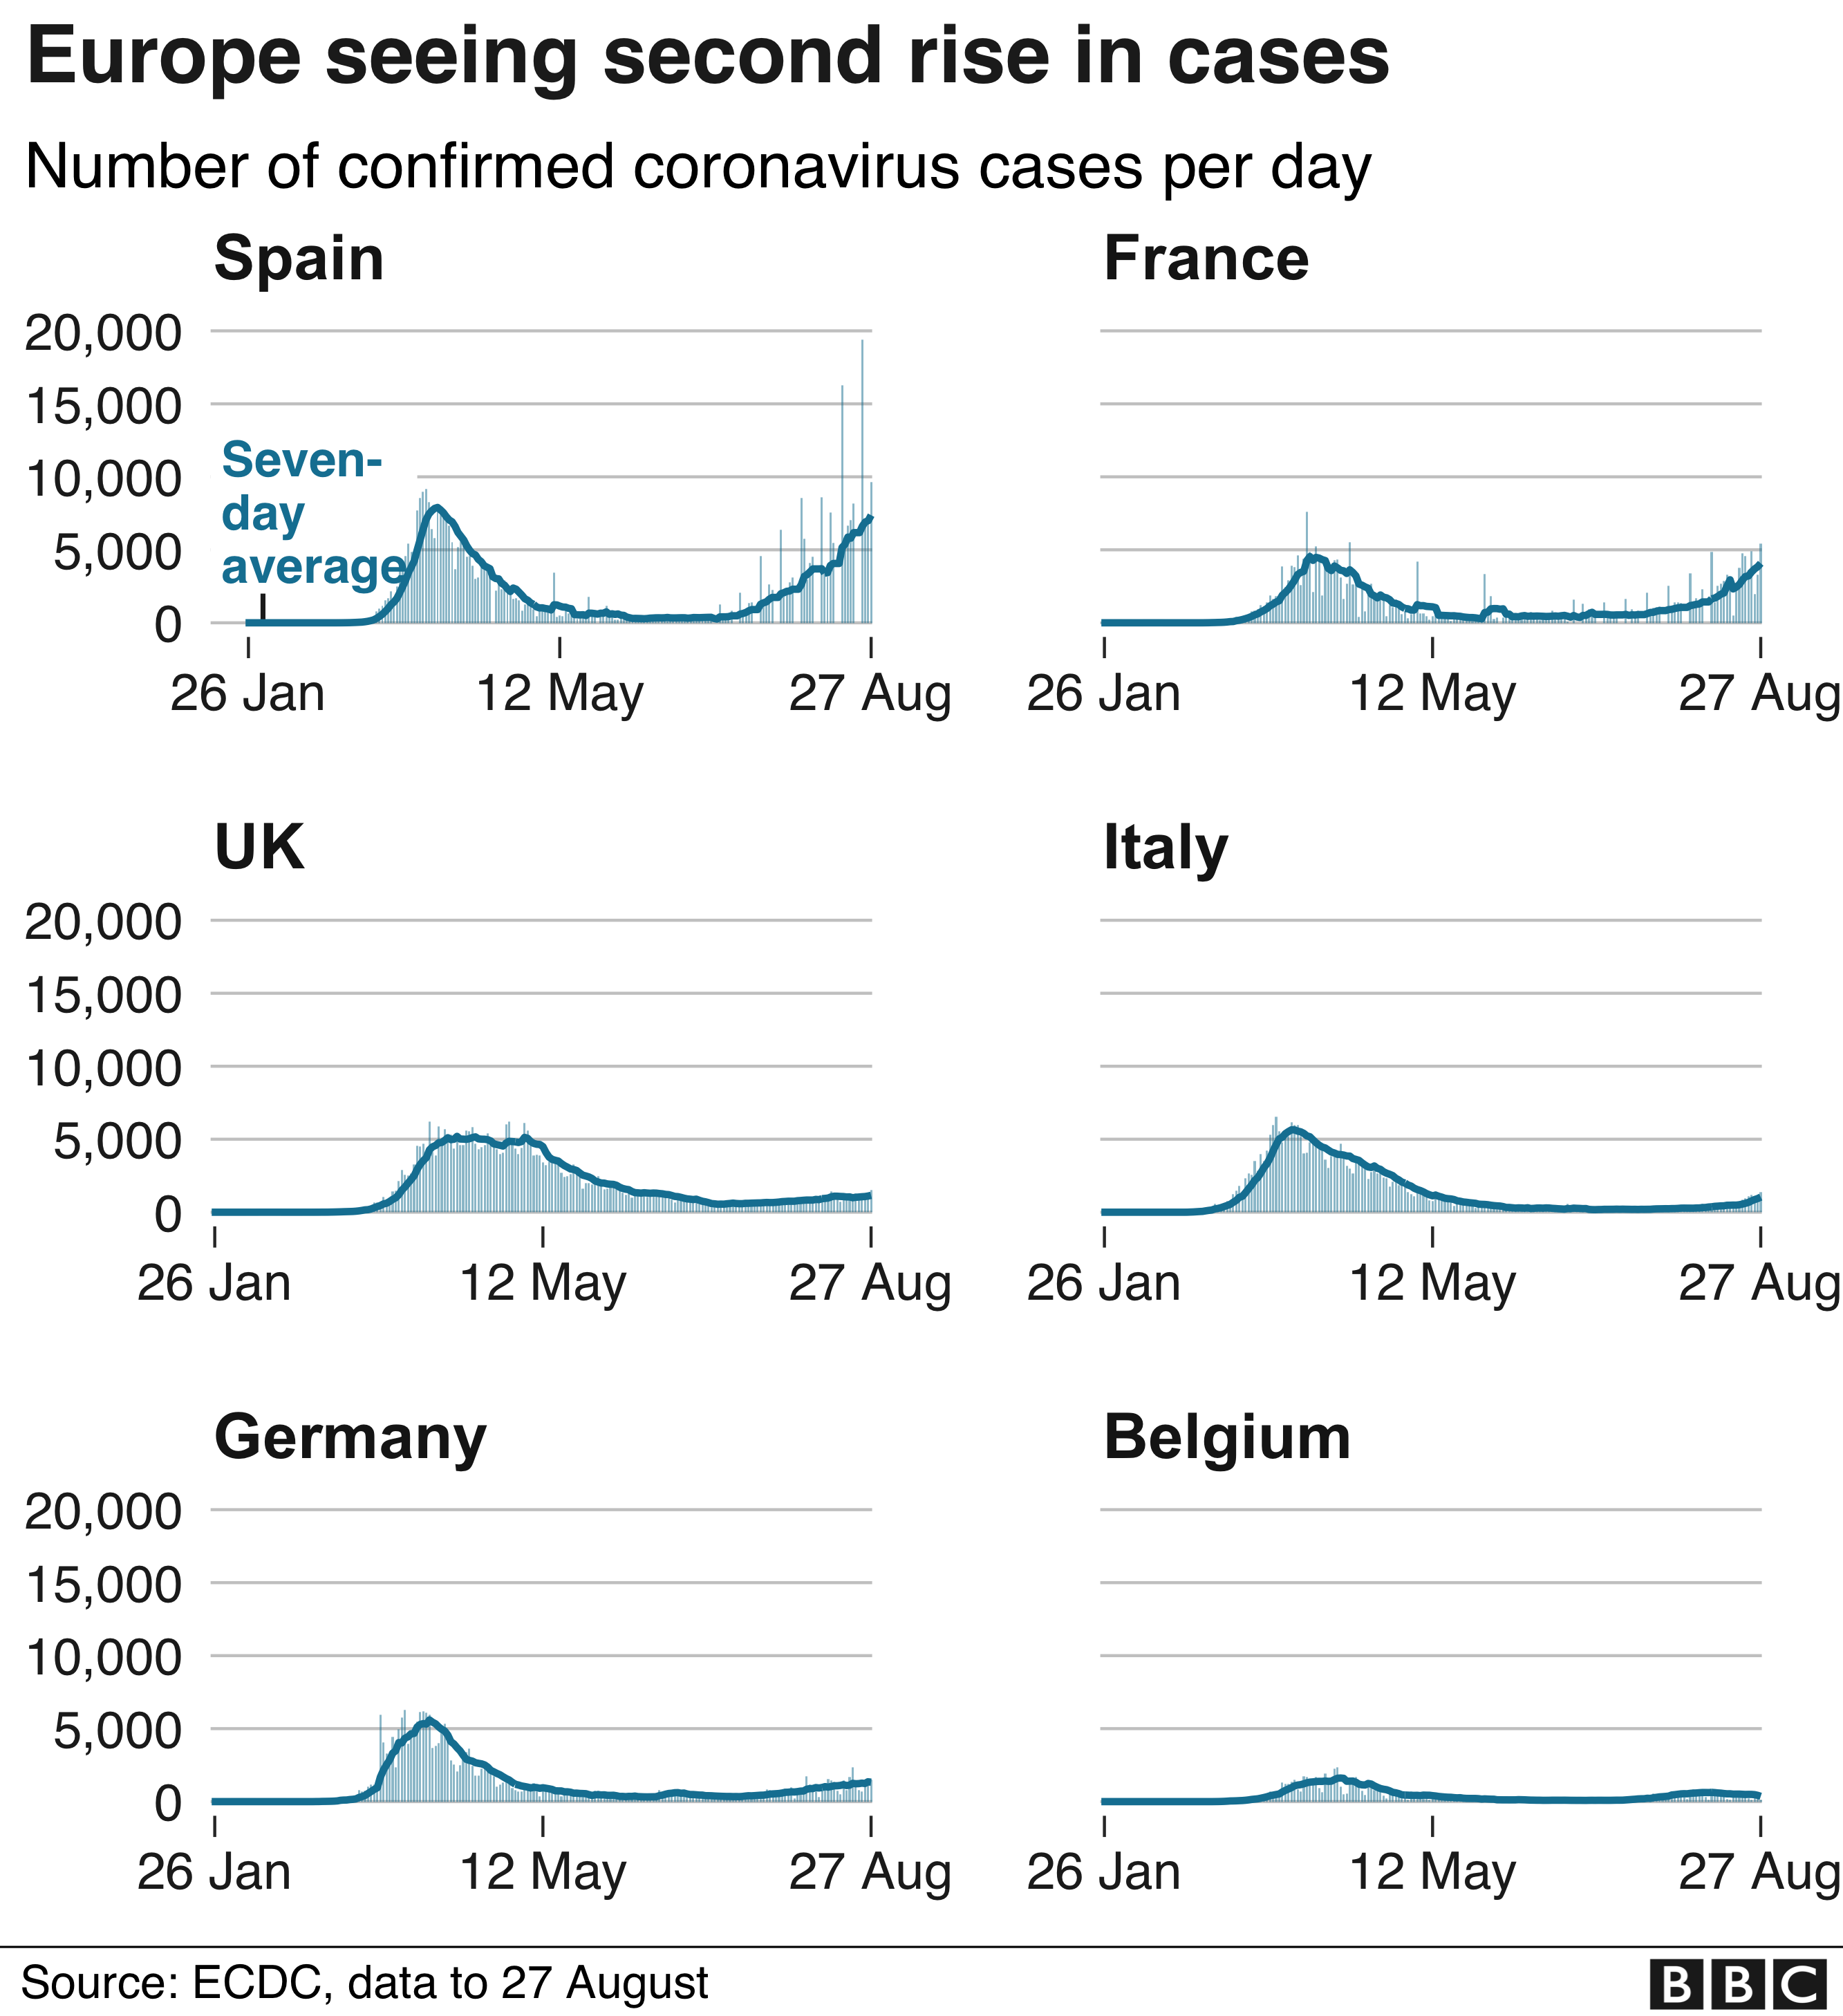 Grafik yang menunjukkan peningkatan kedua kasus virus corona di beberapa negara Eropa.